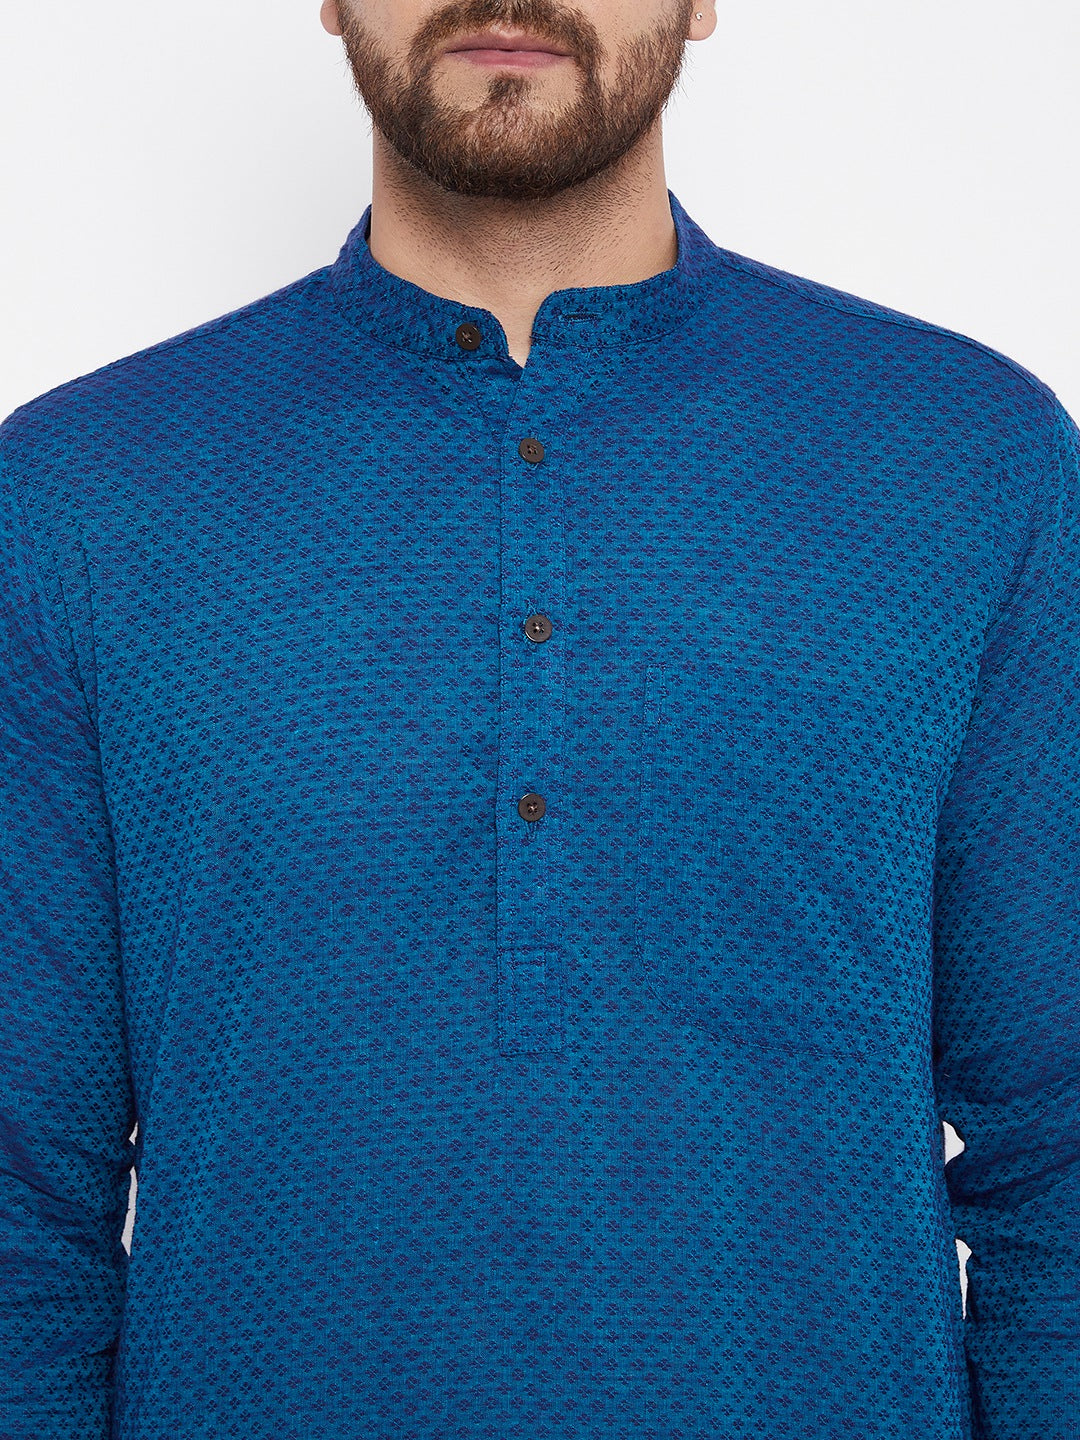 Men's Pure Cotton Blue Straight Kurta - Even Apparels